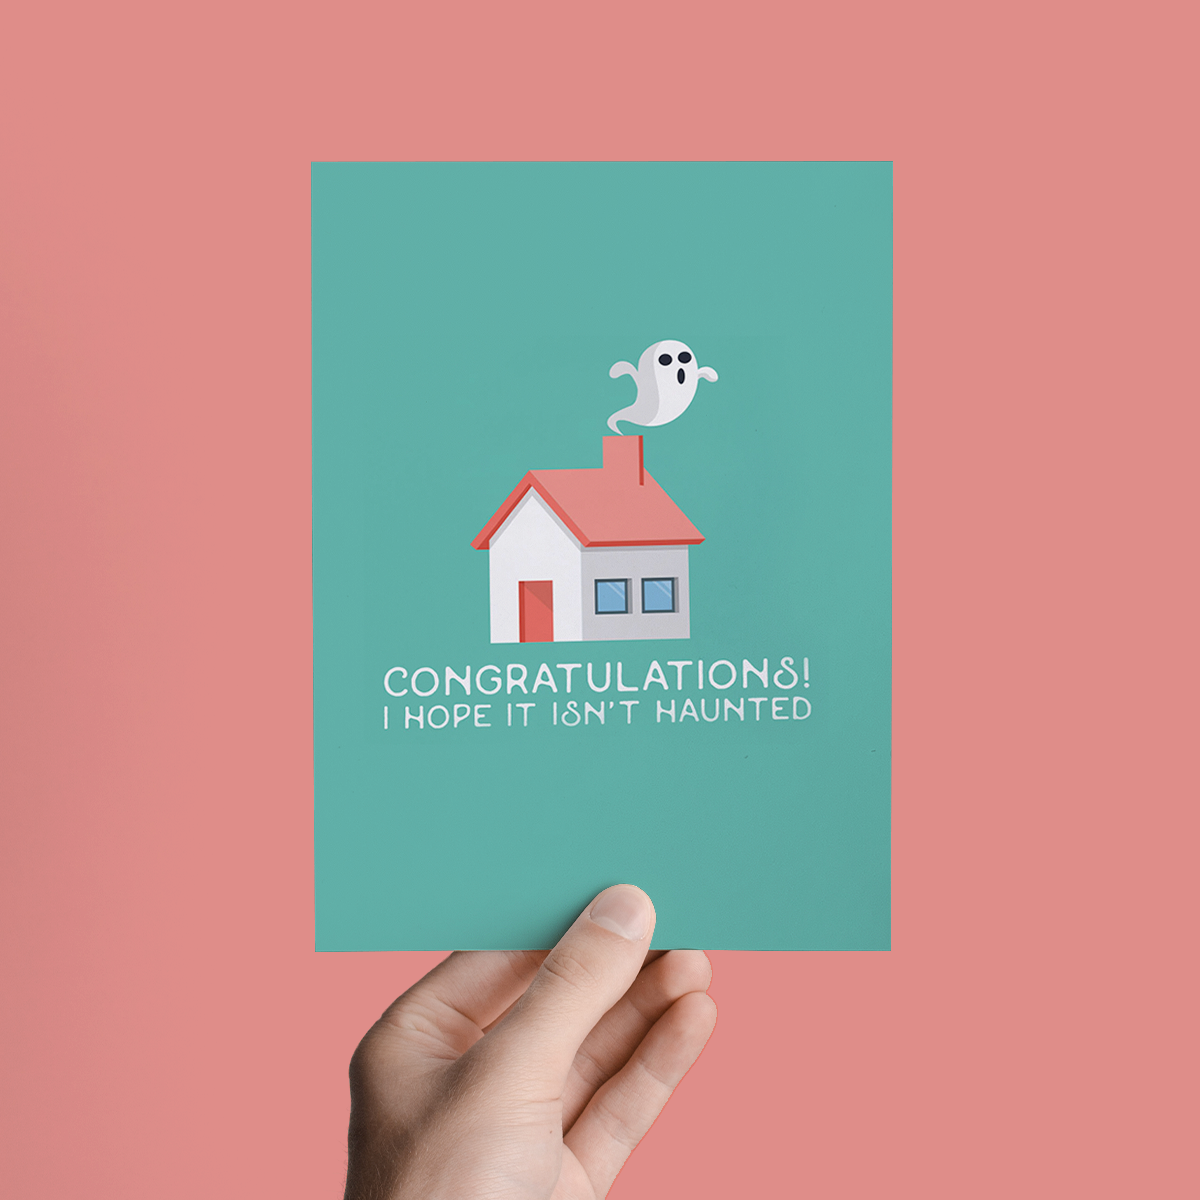 I Hope It Isn't Haunted, New Home Housewarming Greeting Card